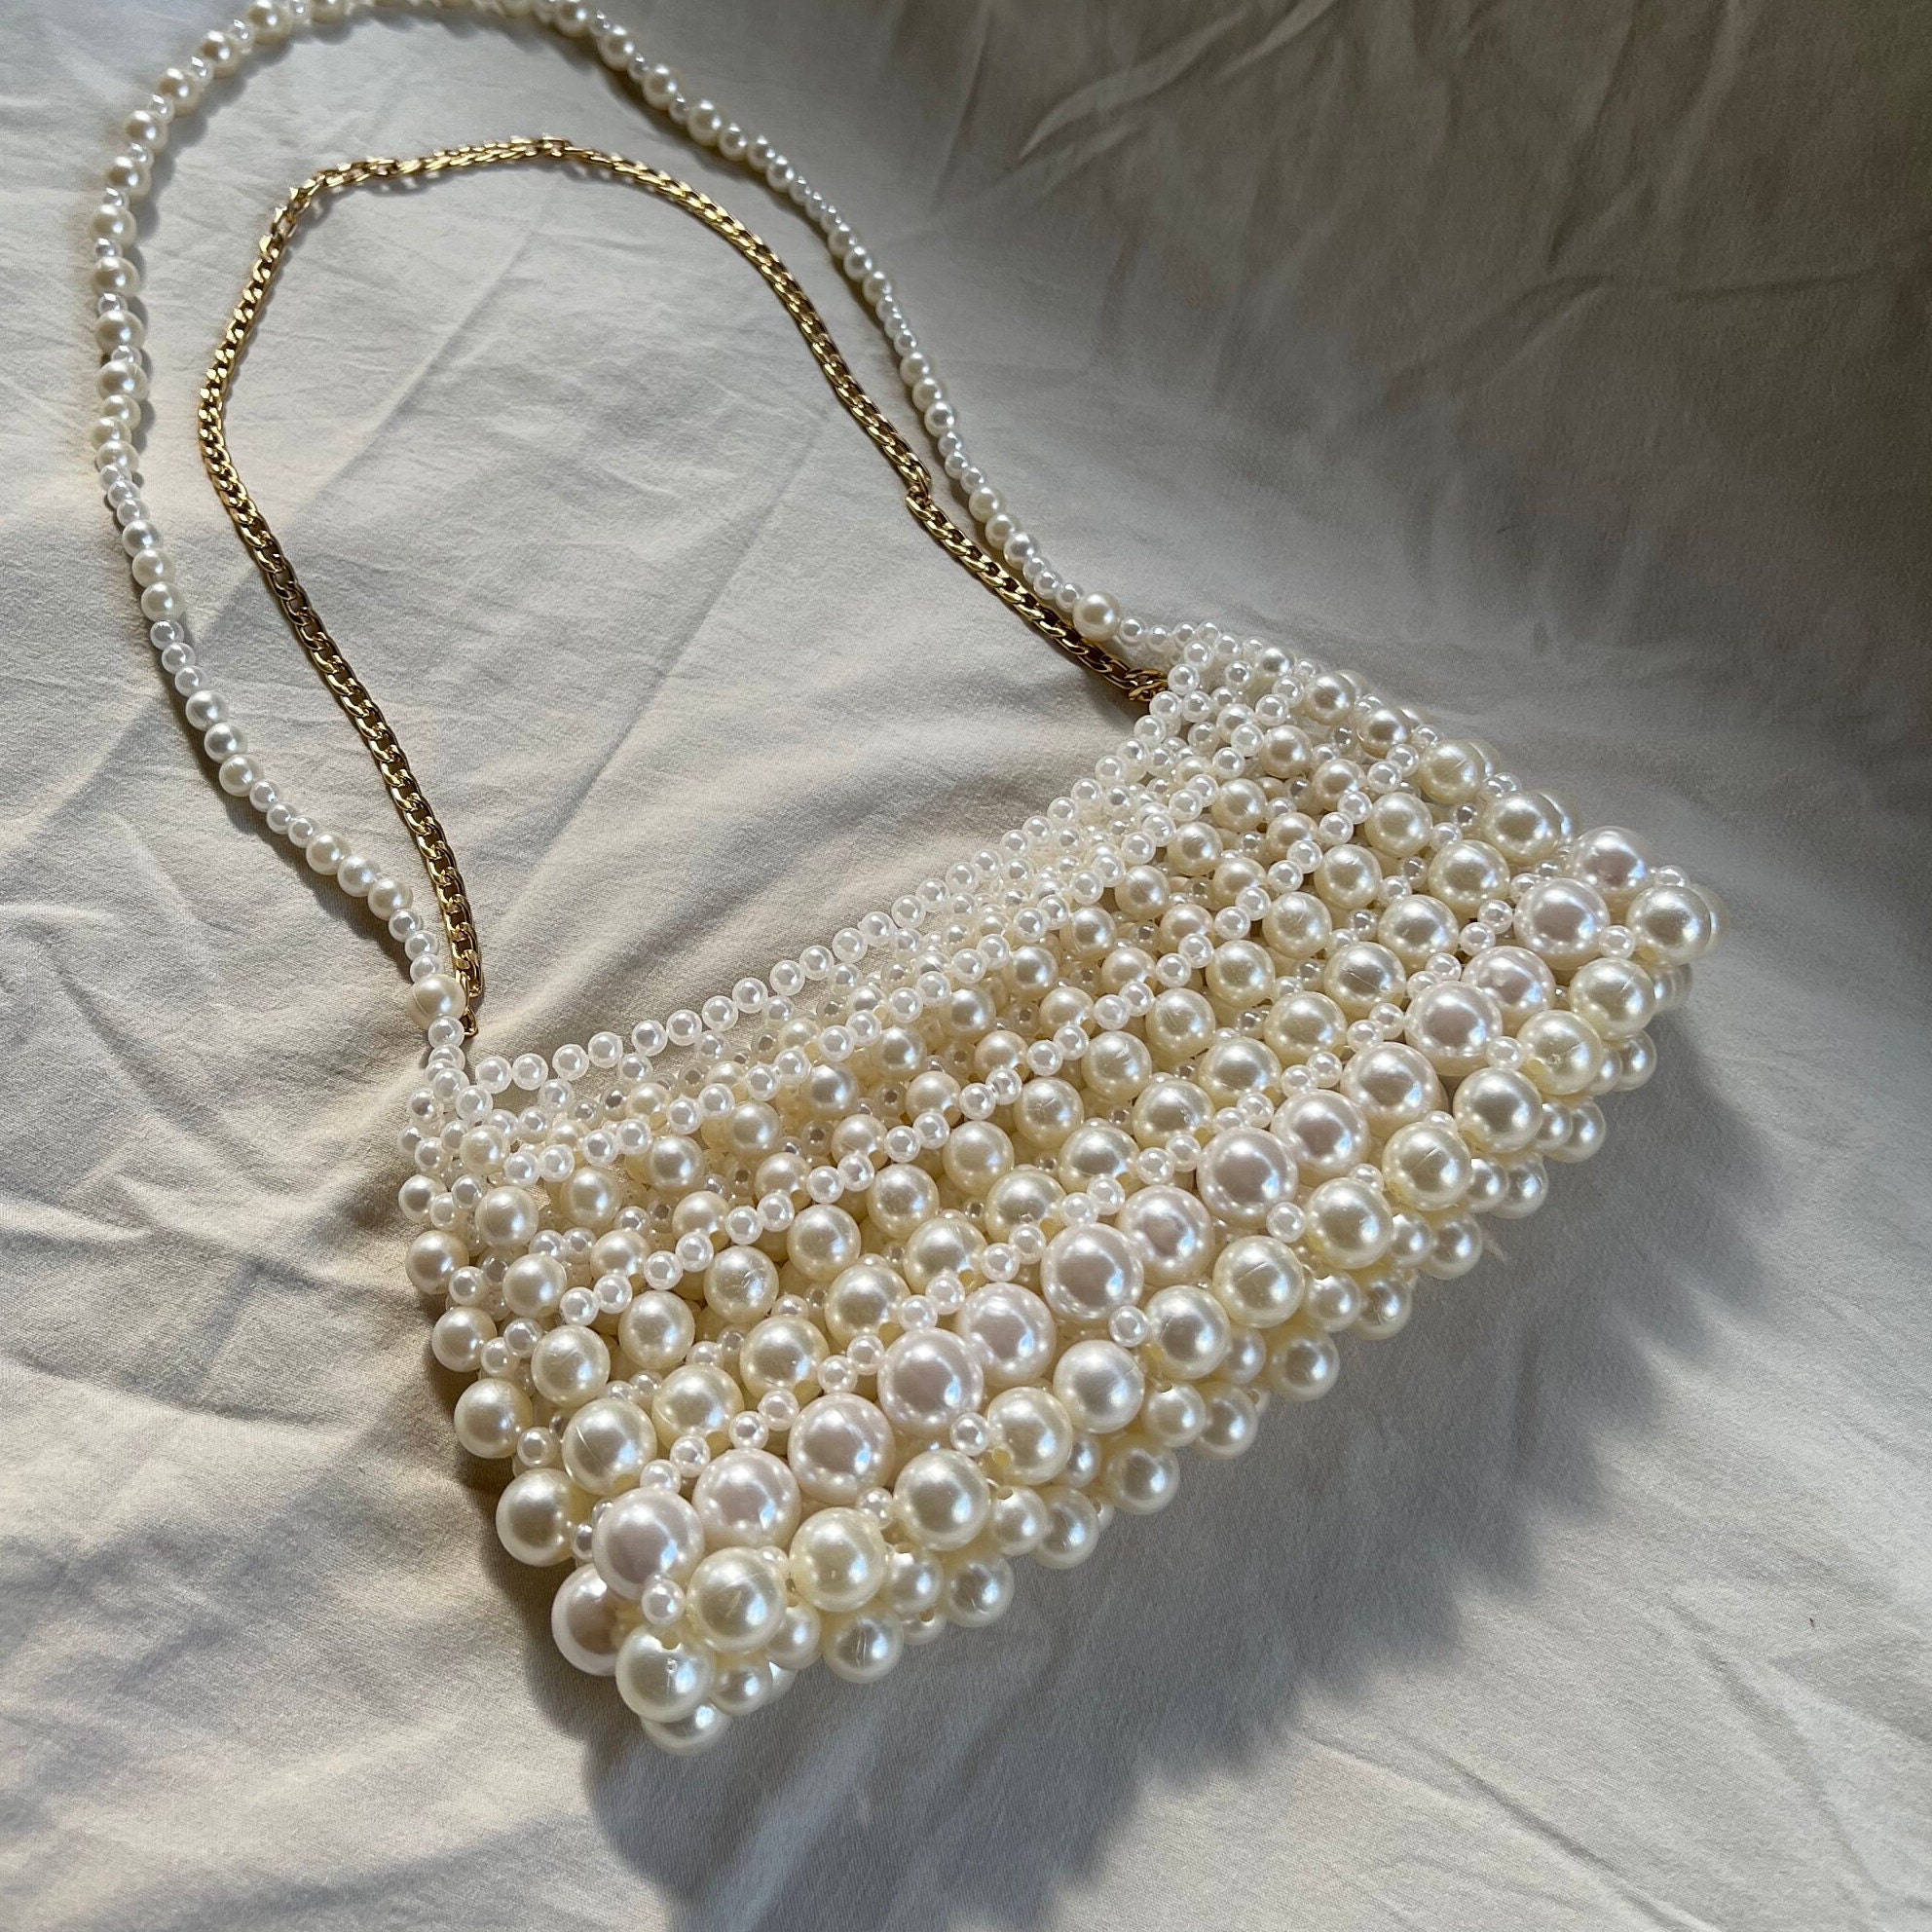 Pearl Beaded Clutch Purse Bag Bridal Wedding Vintage 50s Made in Japan  Ivory Satin Lining Zip Closure